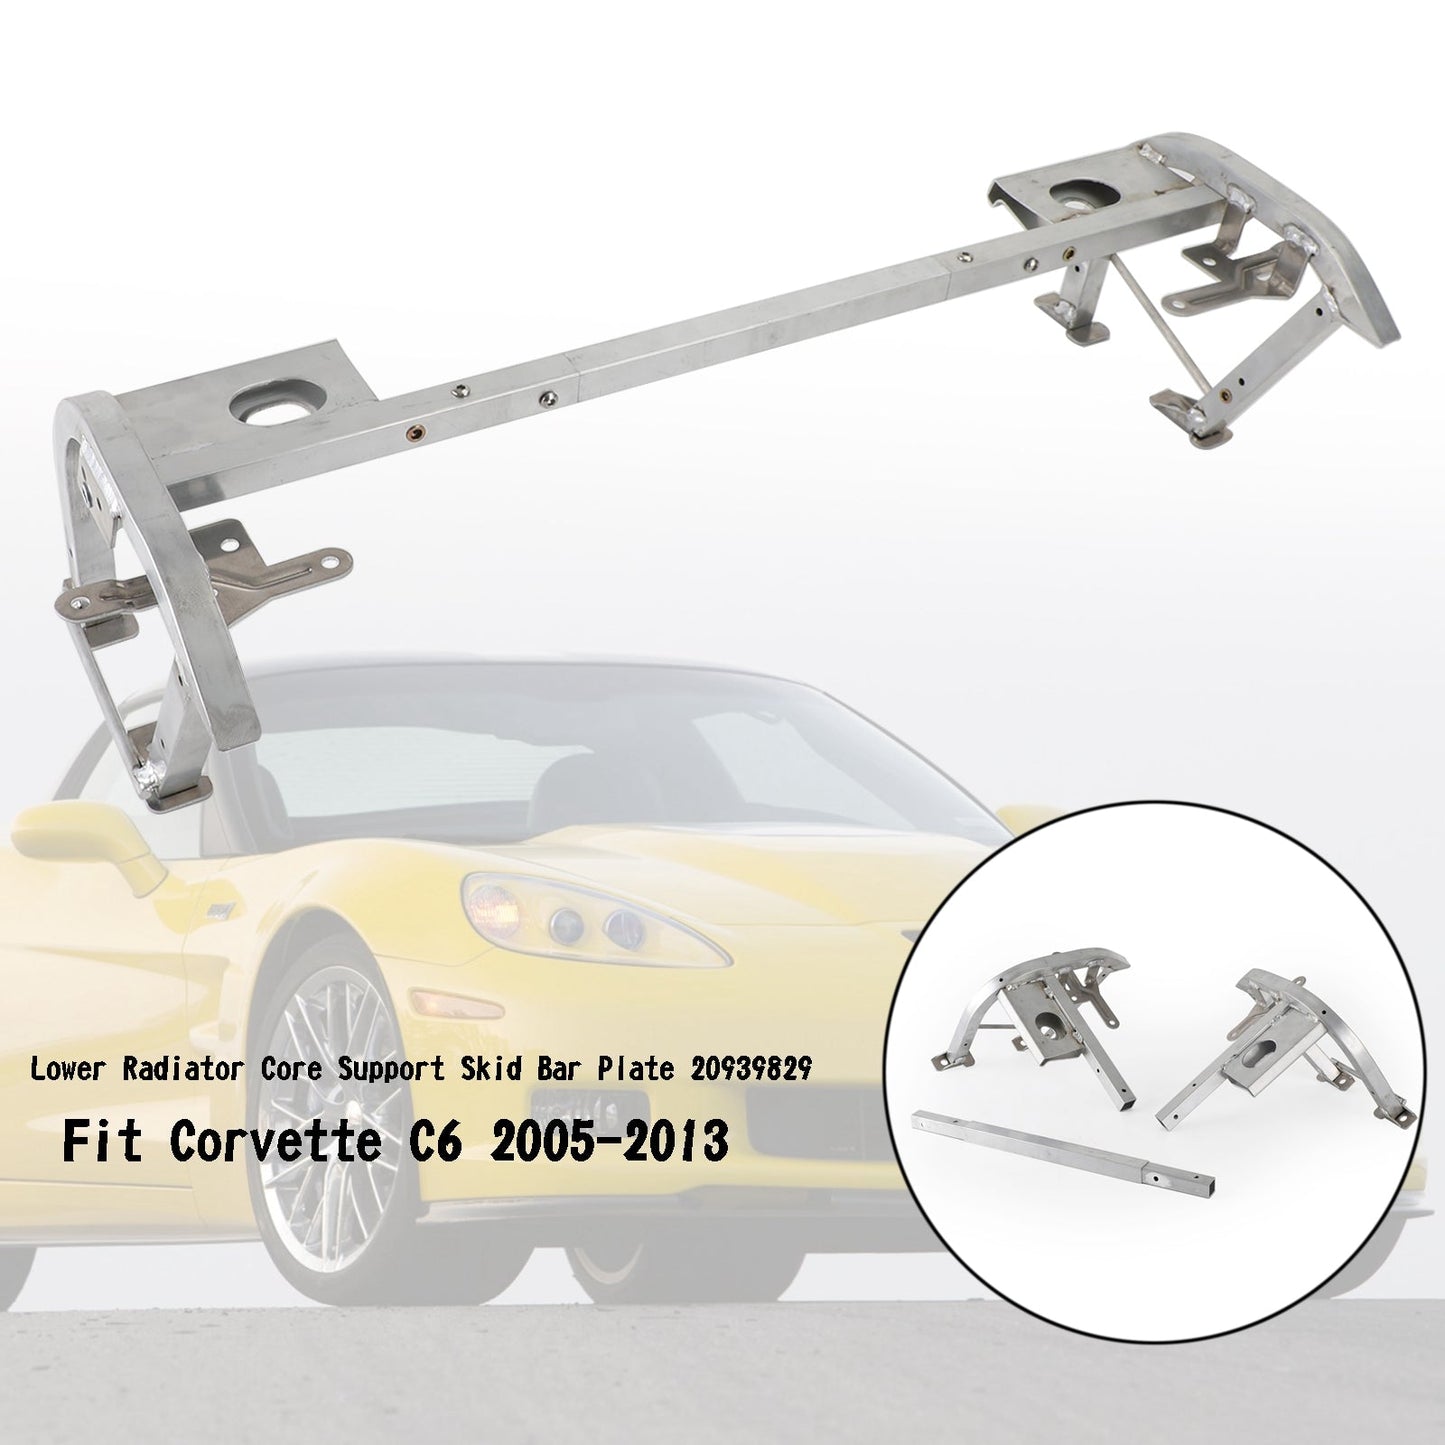 Lower Radiator Core Support Skid Bar Plate 20939829 Fit Corvette C6 2005-2013